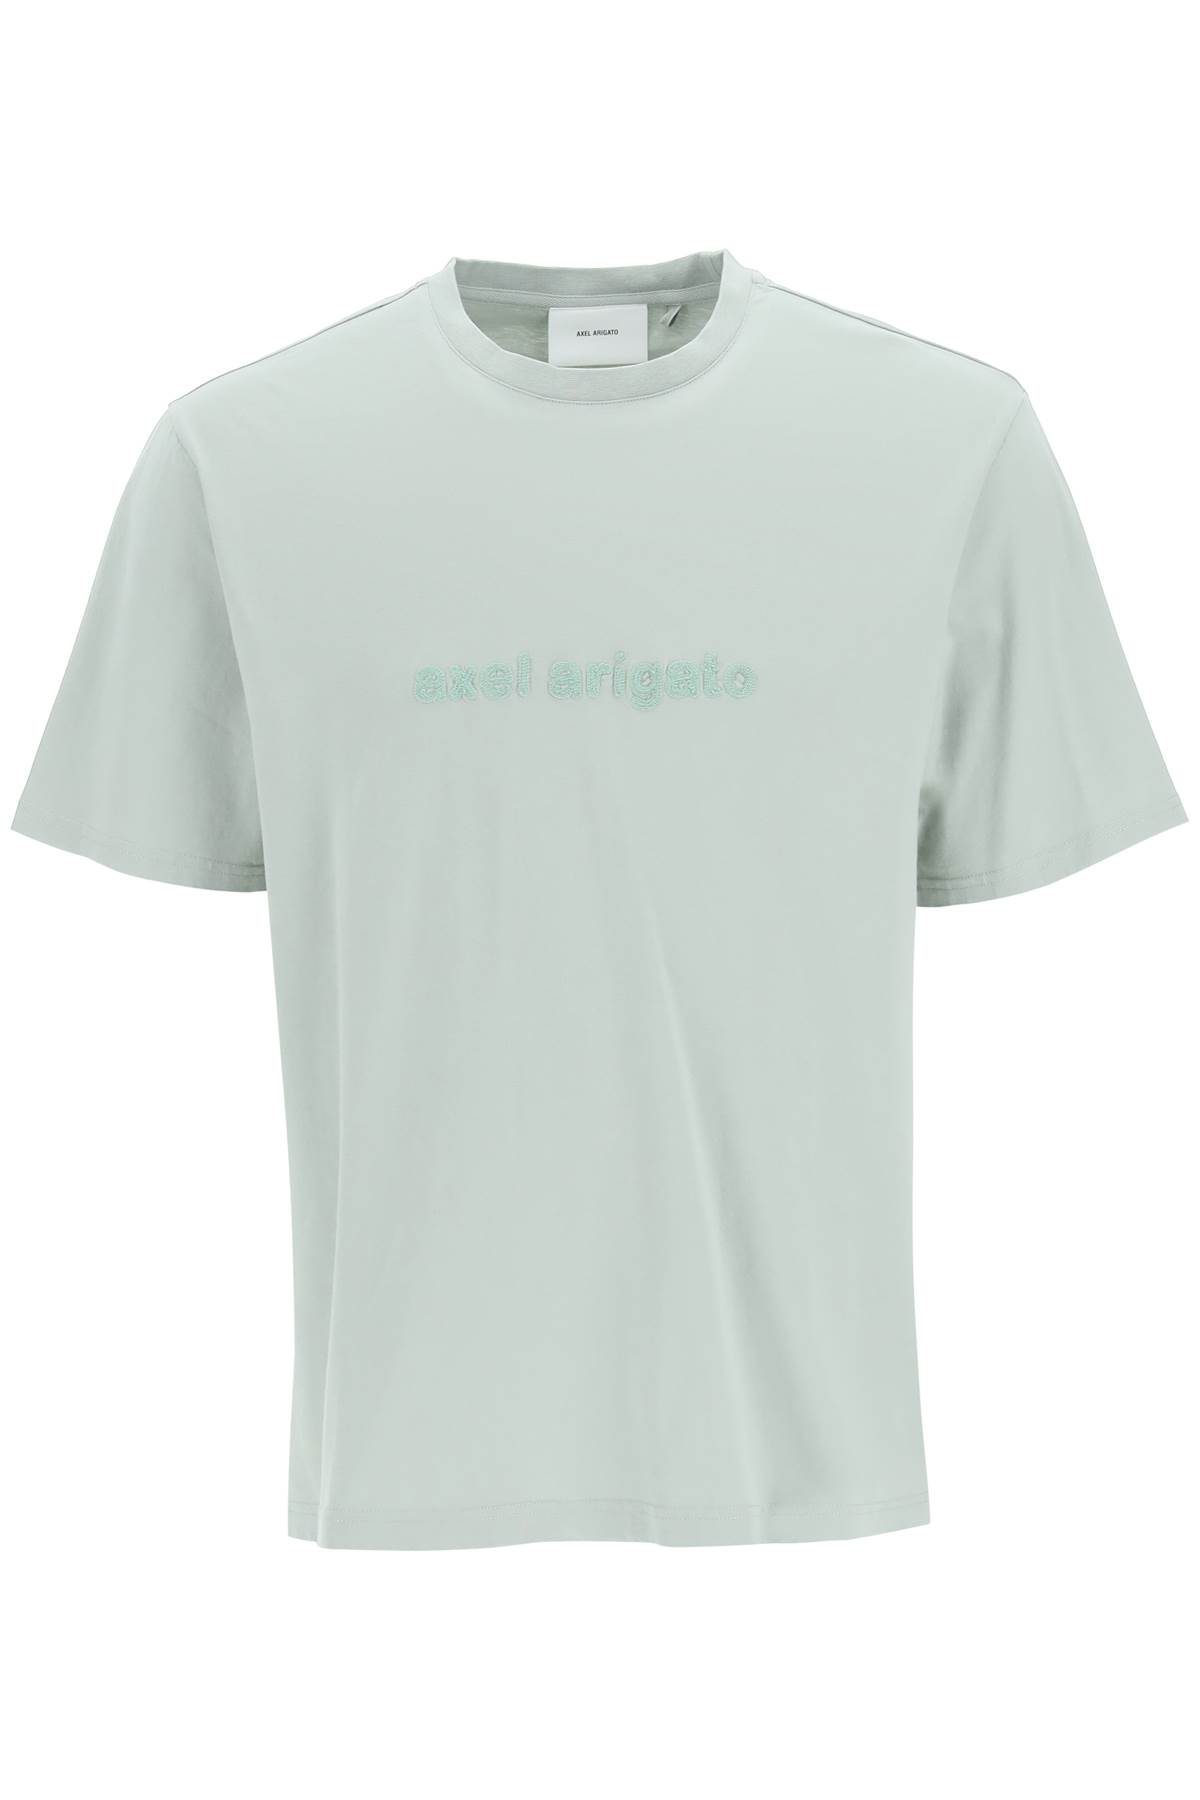 Axel Arigato Exist T-shirt